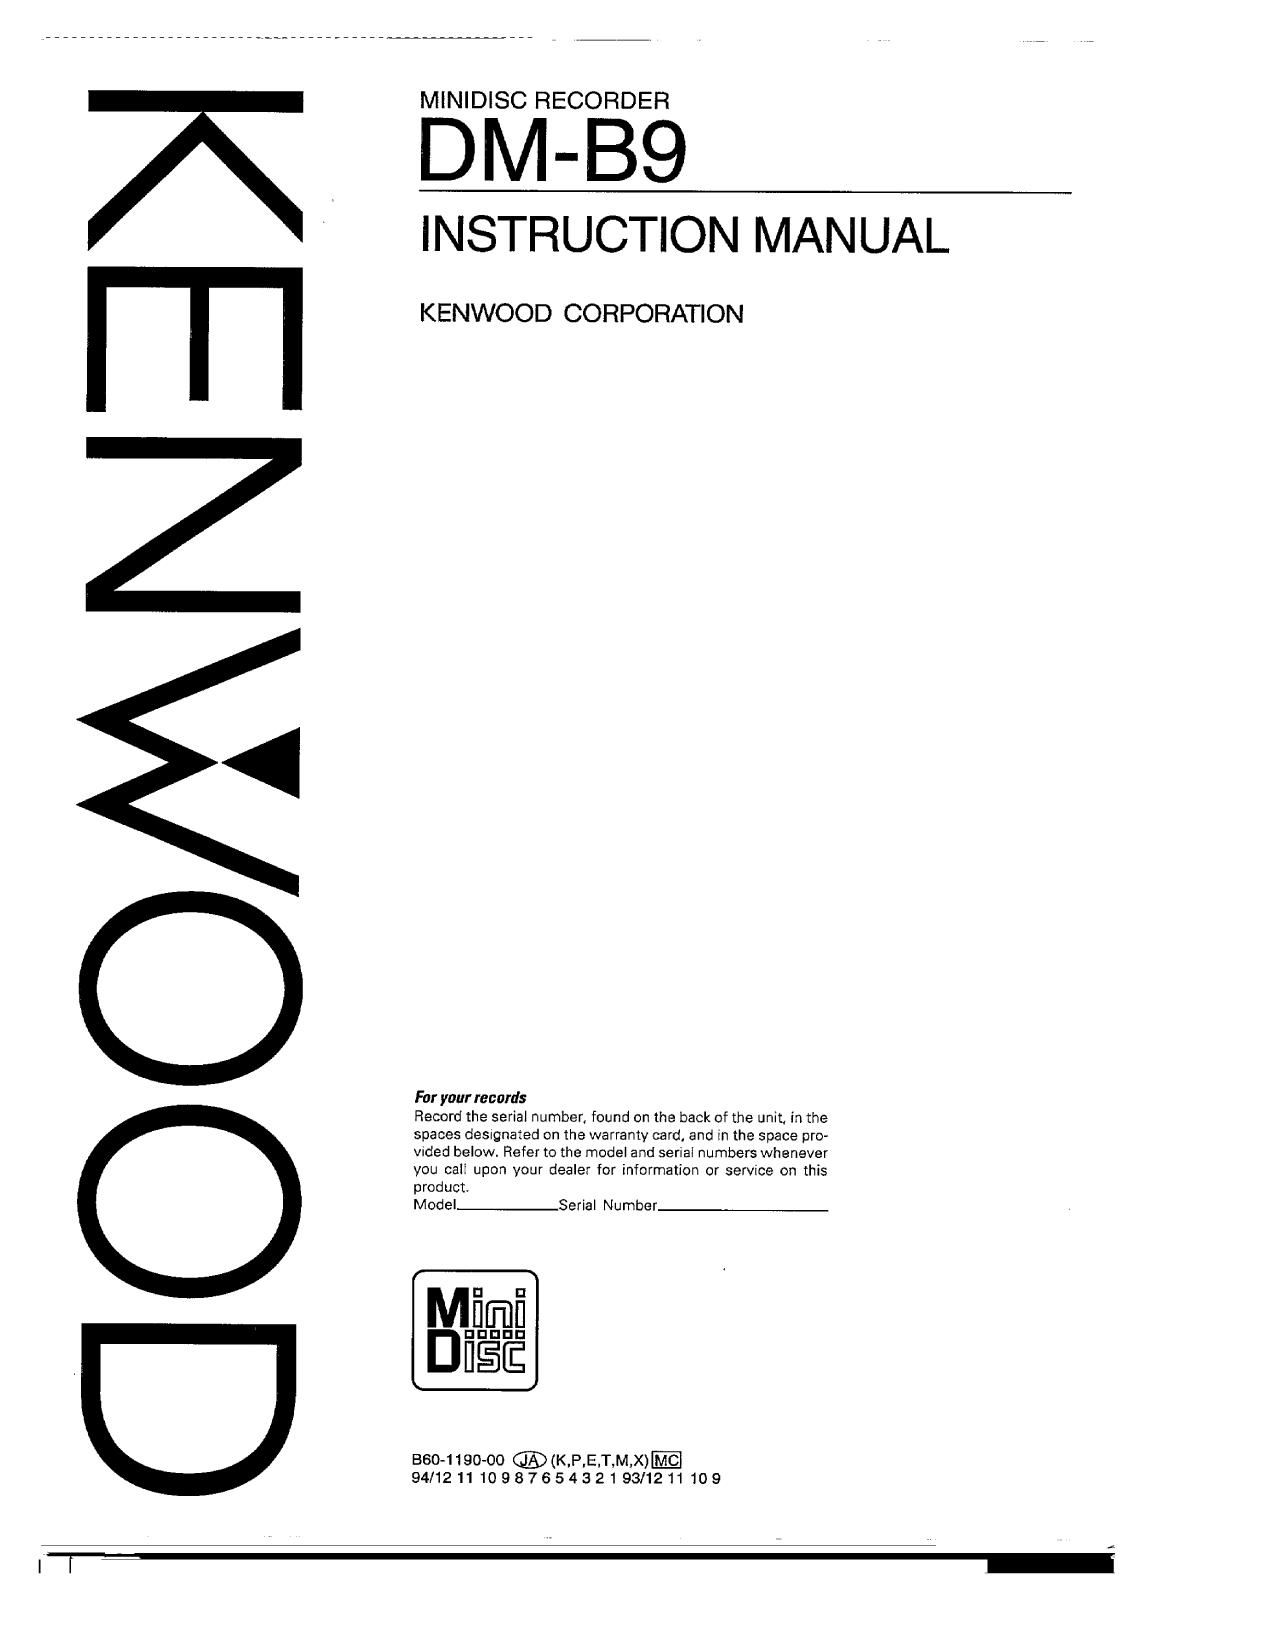 Kenwood DMB 9 Owners Manual